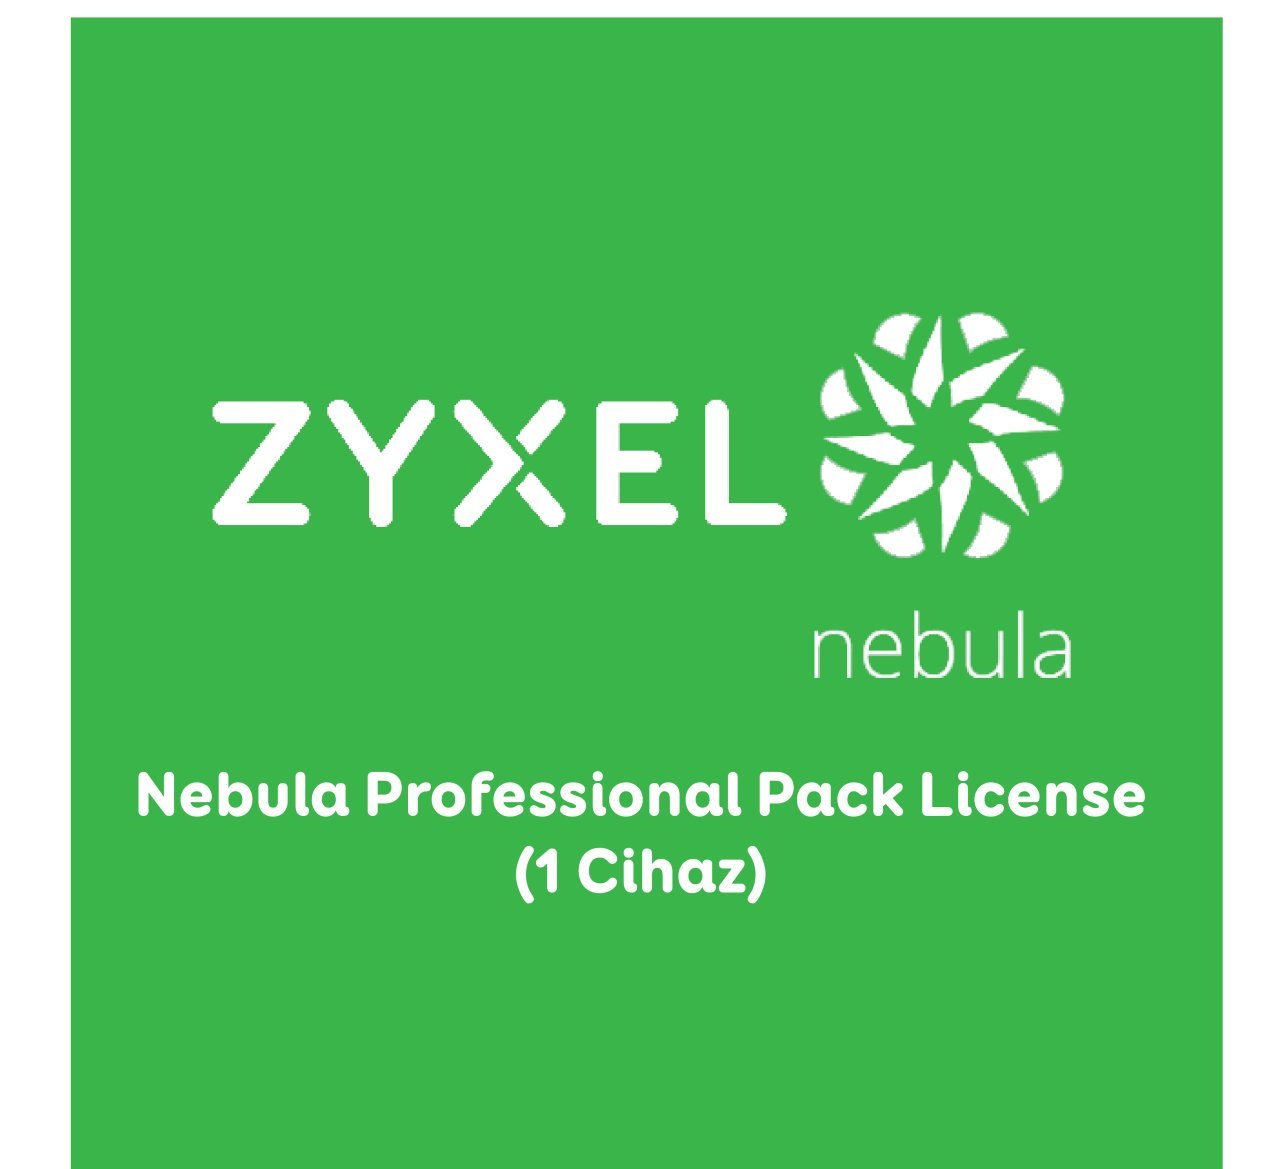 Nebula Professional Pack License (1 Cihaz ) 2 YIL